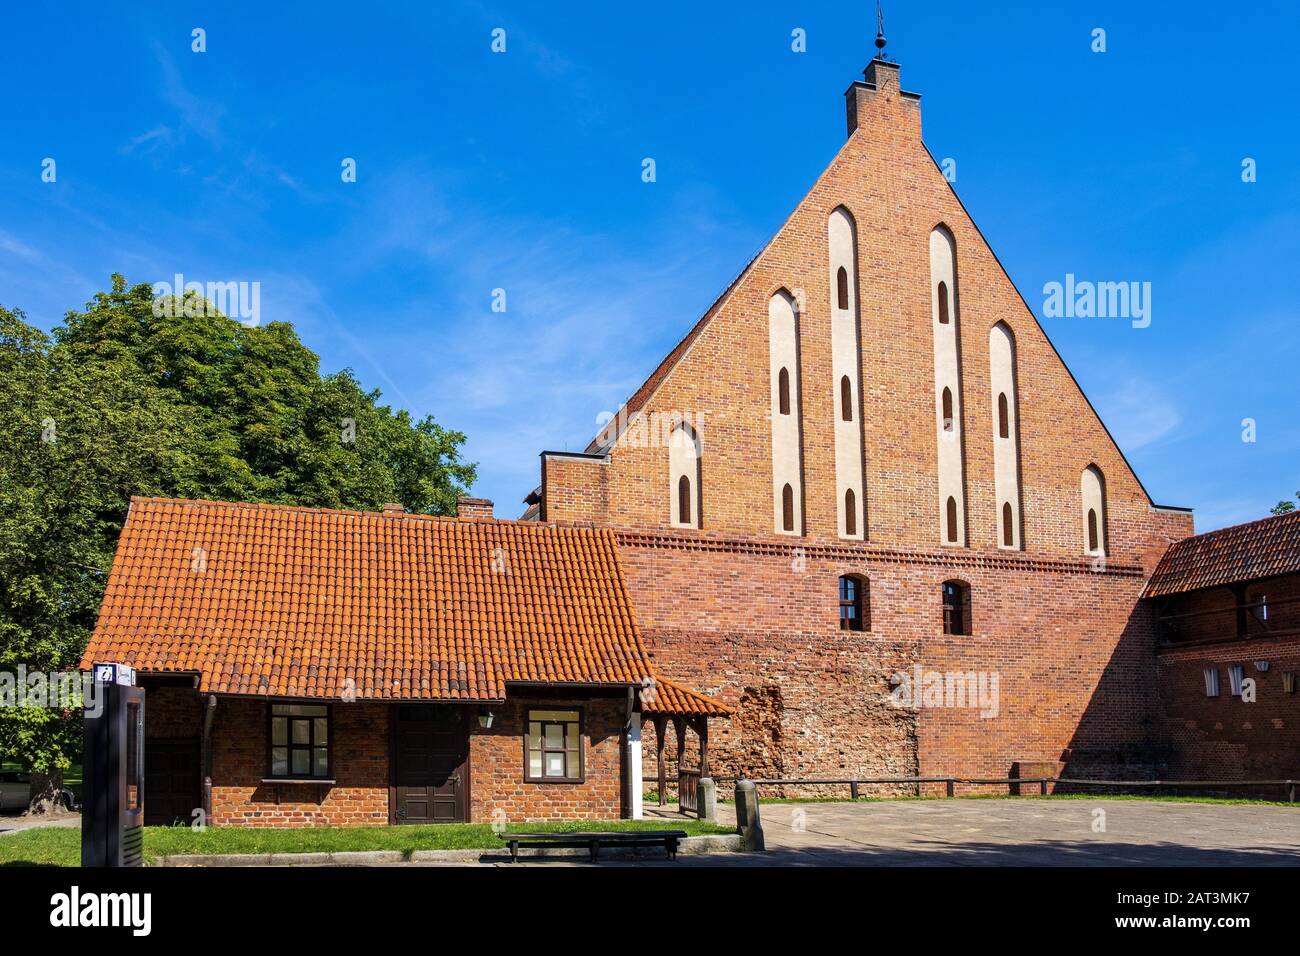 Malbork, Pomerania / Poland - 2019/08/24: Lower Castle gothic architecture of the medieval Teutonic Order Castle in Malbork, Poland Stock Photo